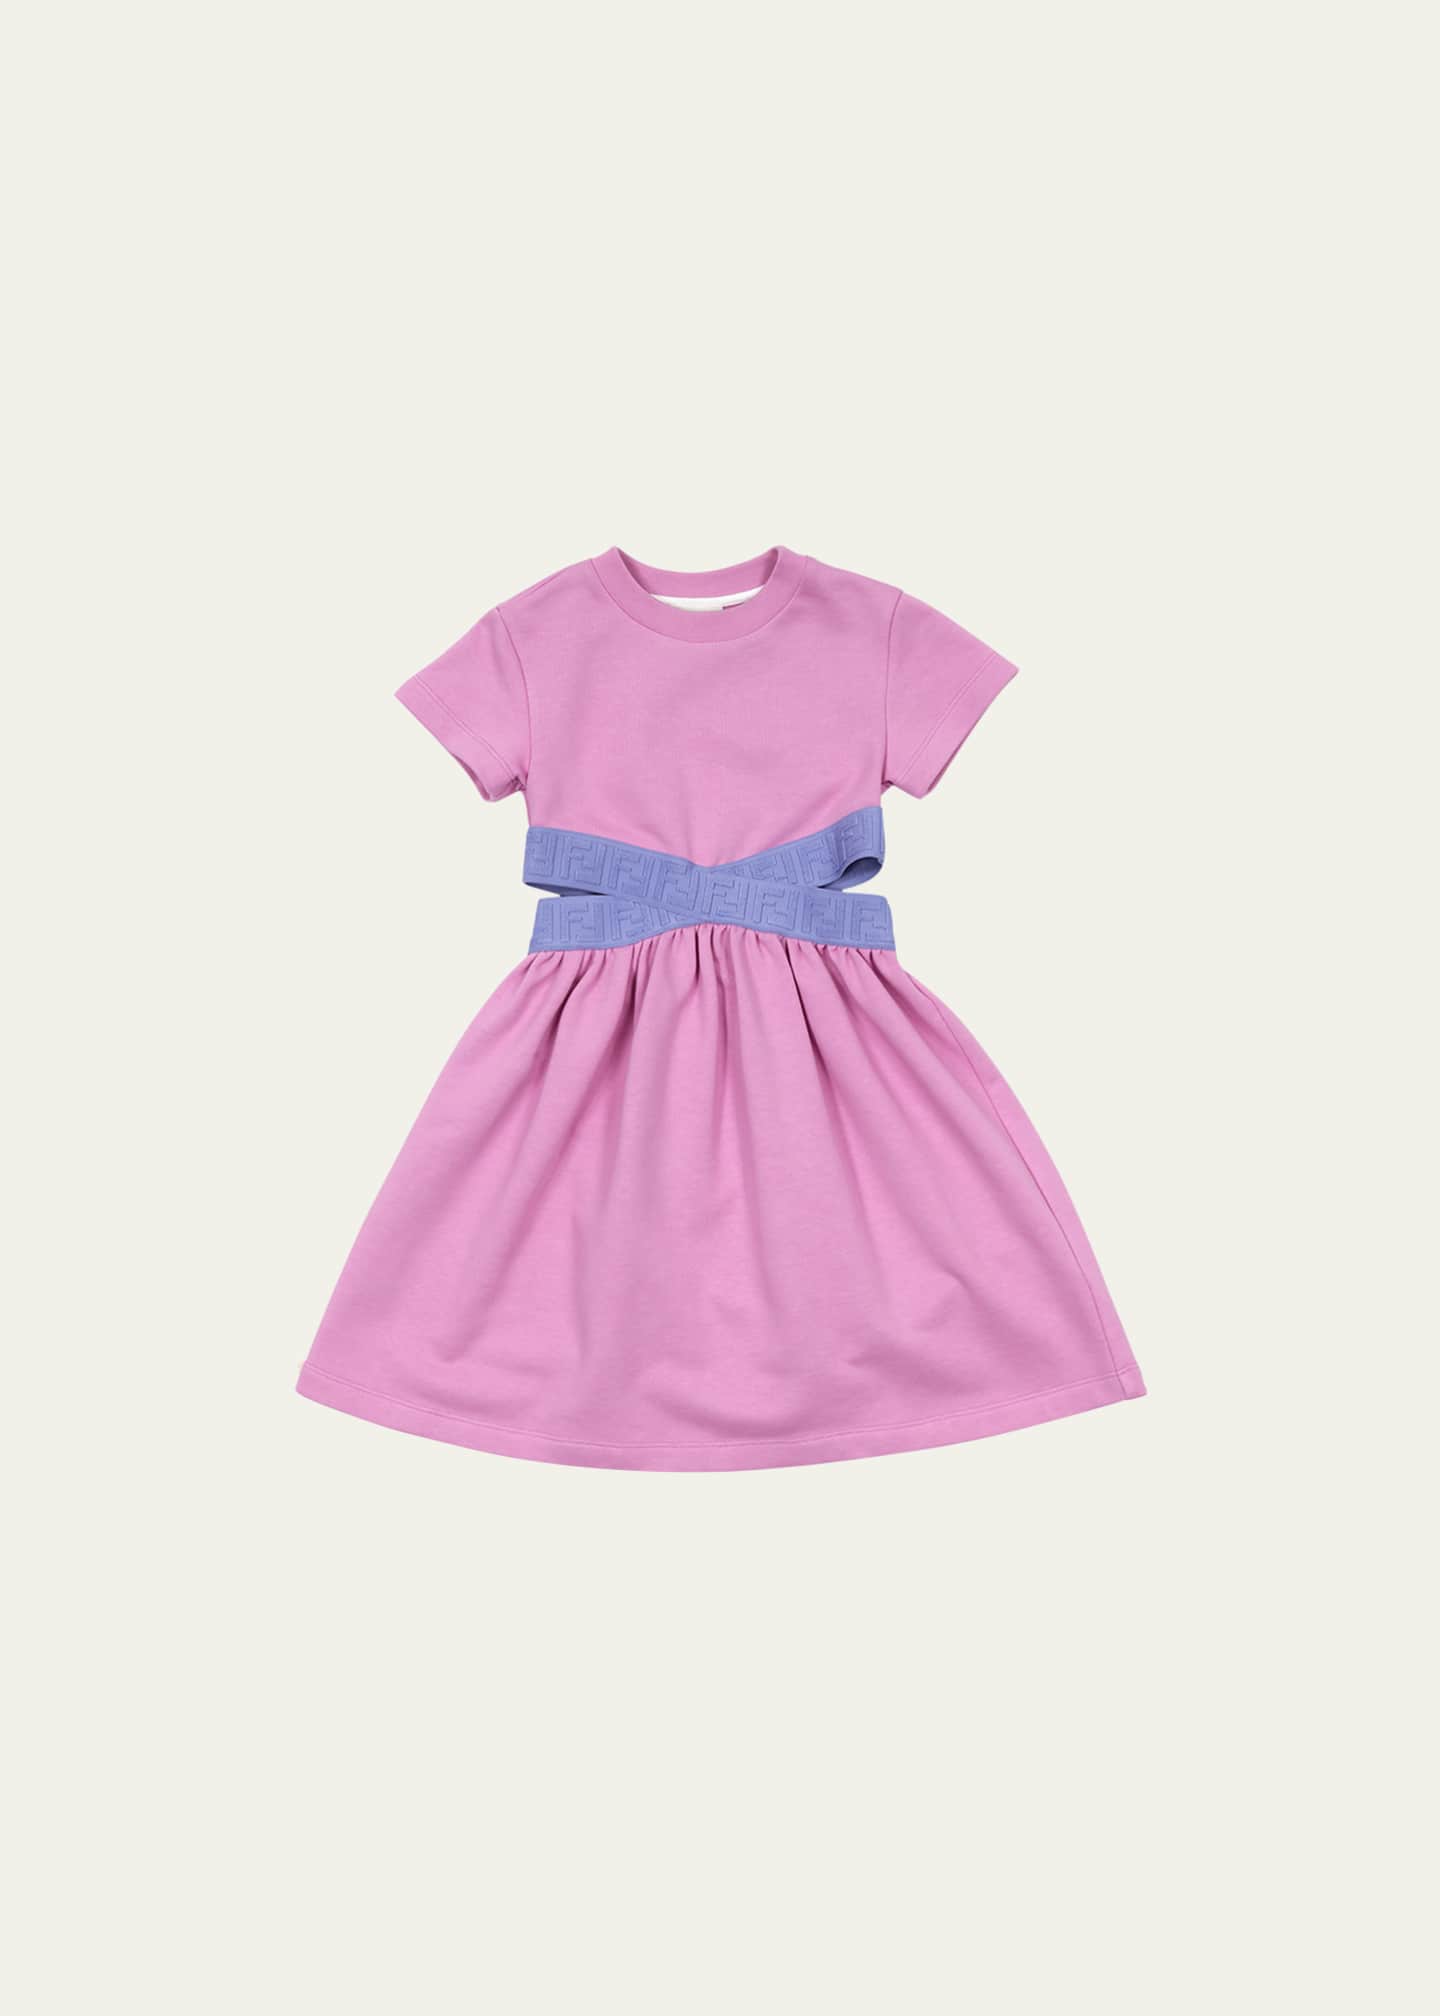 Fendi Girl's Monogram Trim Dress, Size 4-14